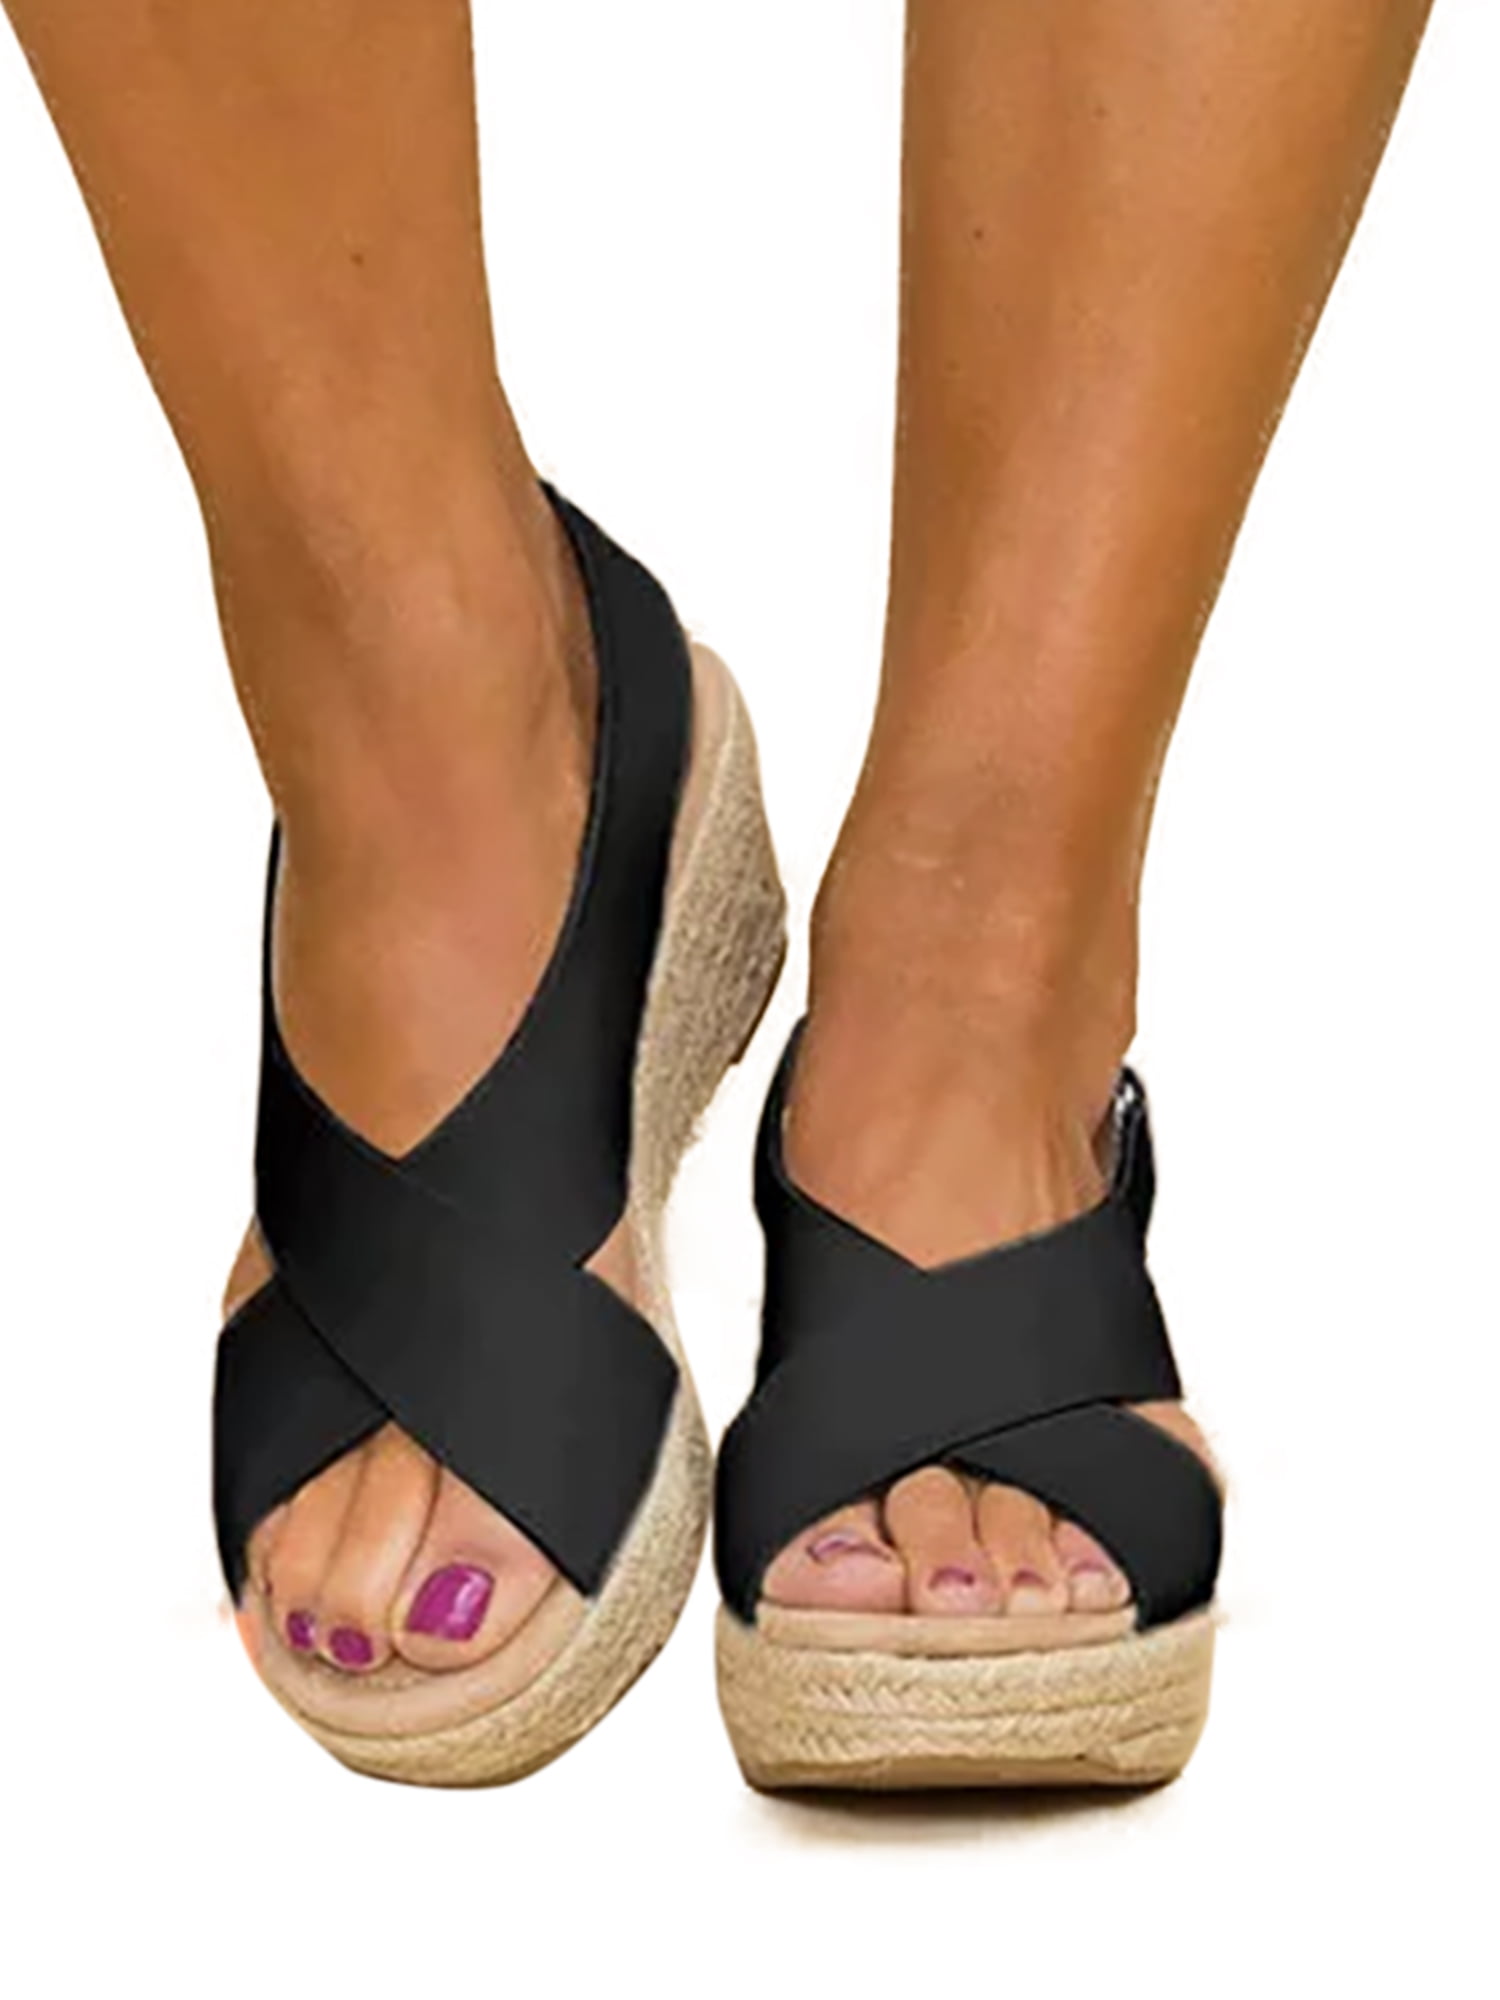 Wedge Sandals Sandals For Women Womens Platform Sandles Black Summer Espadrilles White Flat Wedges Sandal Size 6 Espadrille Tan Ankle Strap Strappy Outdoor Pink Colorful Red